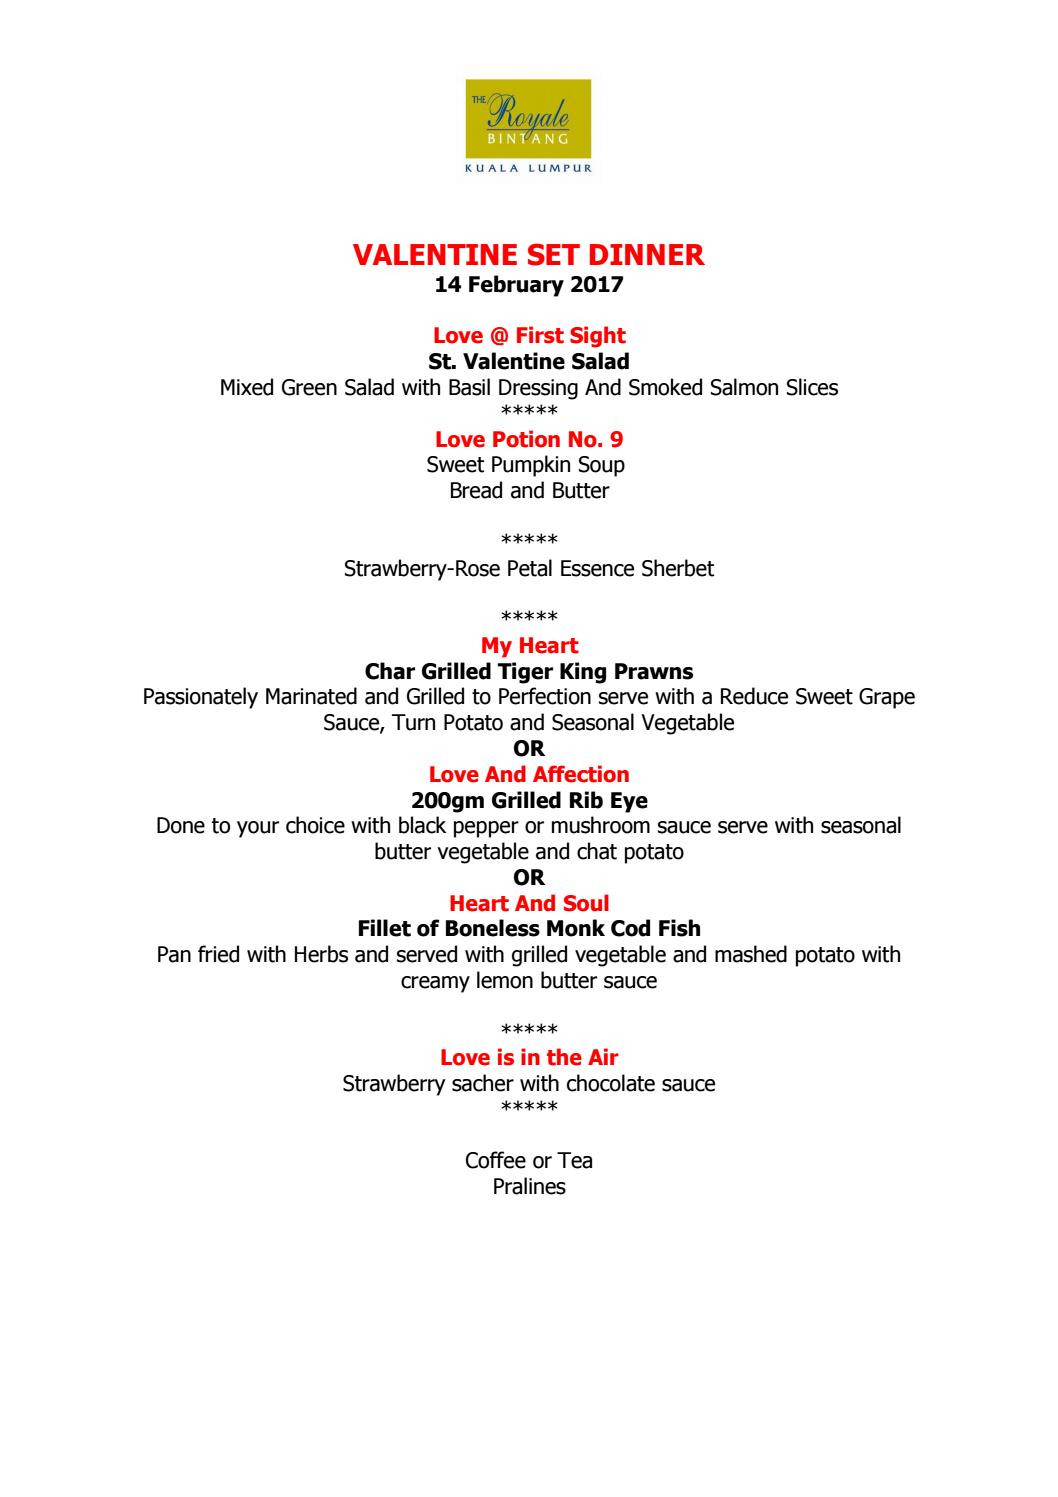 Valentine Dinner Menu
 Valentine set dinner menu 2017 by 11street issuu